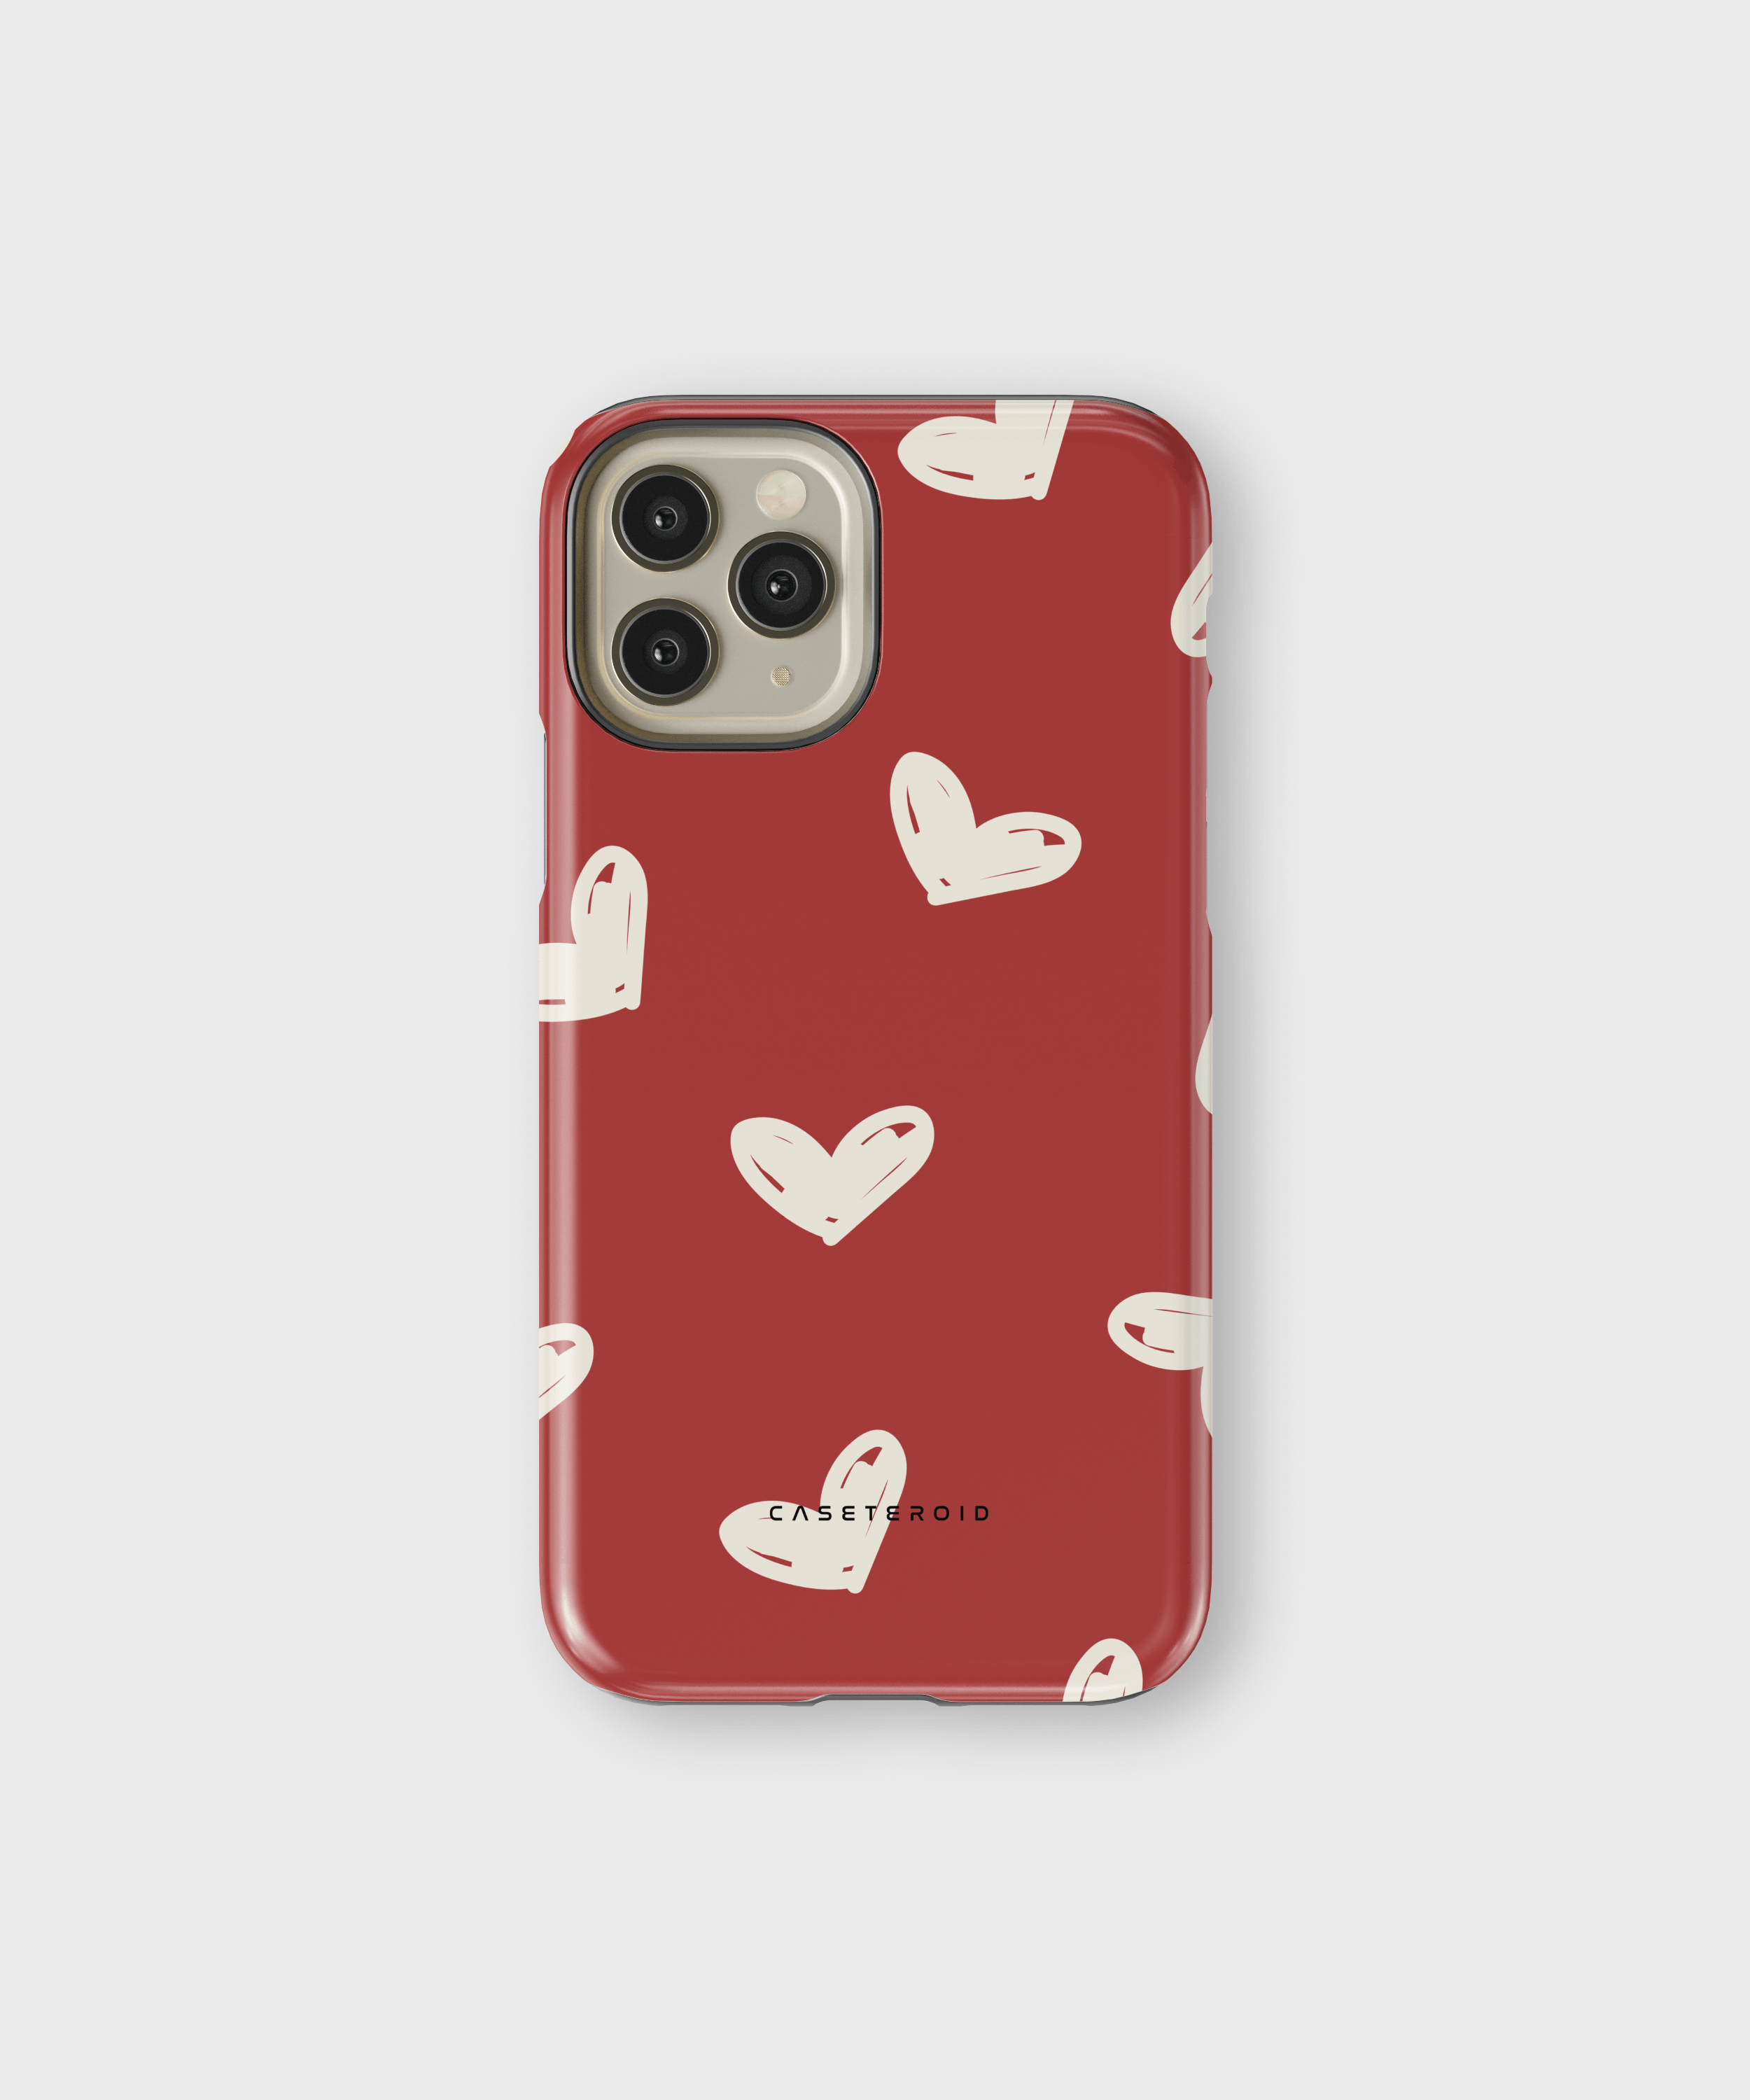 iPhone Tough Case - Crimson Love Notes - CASETEROID